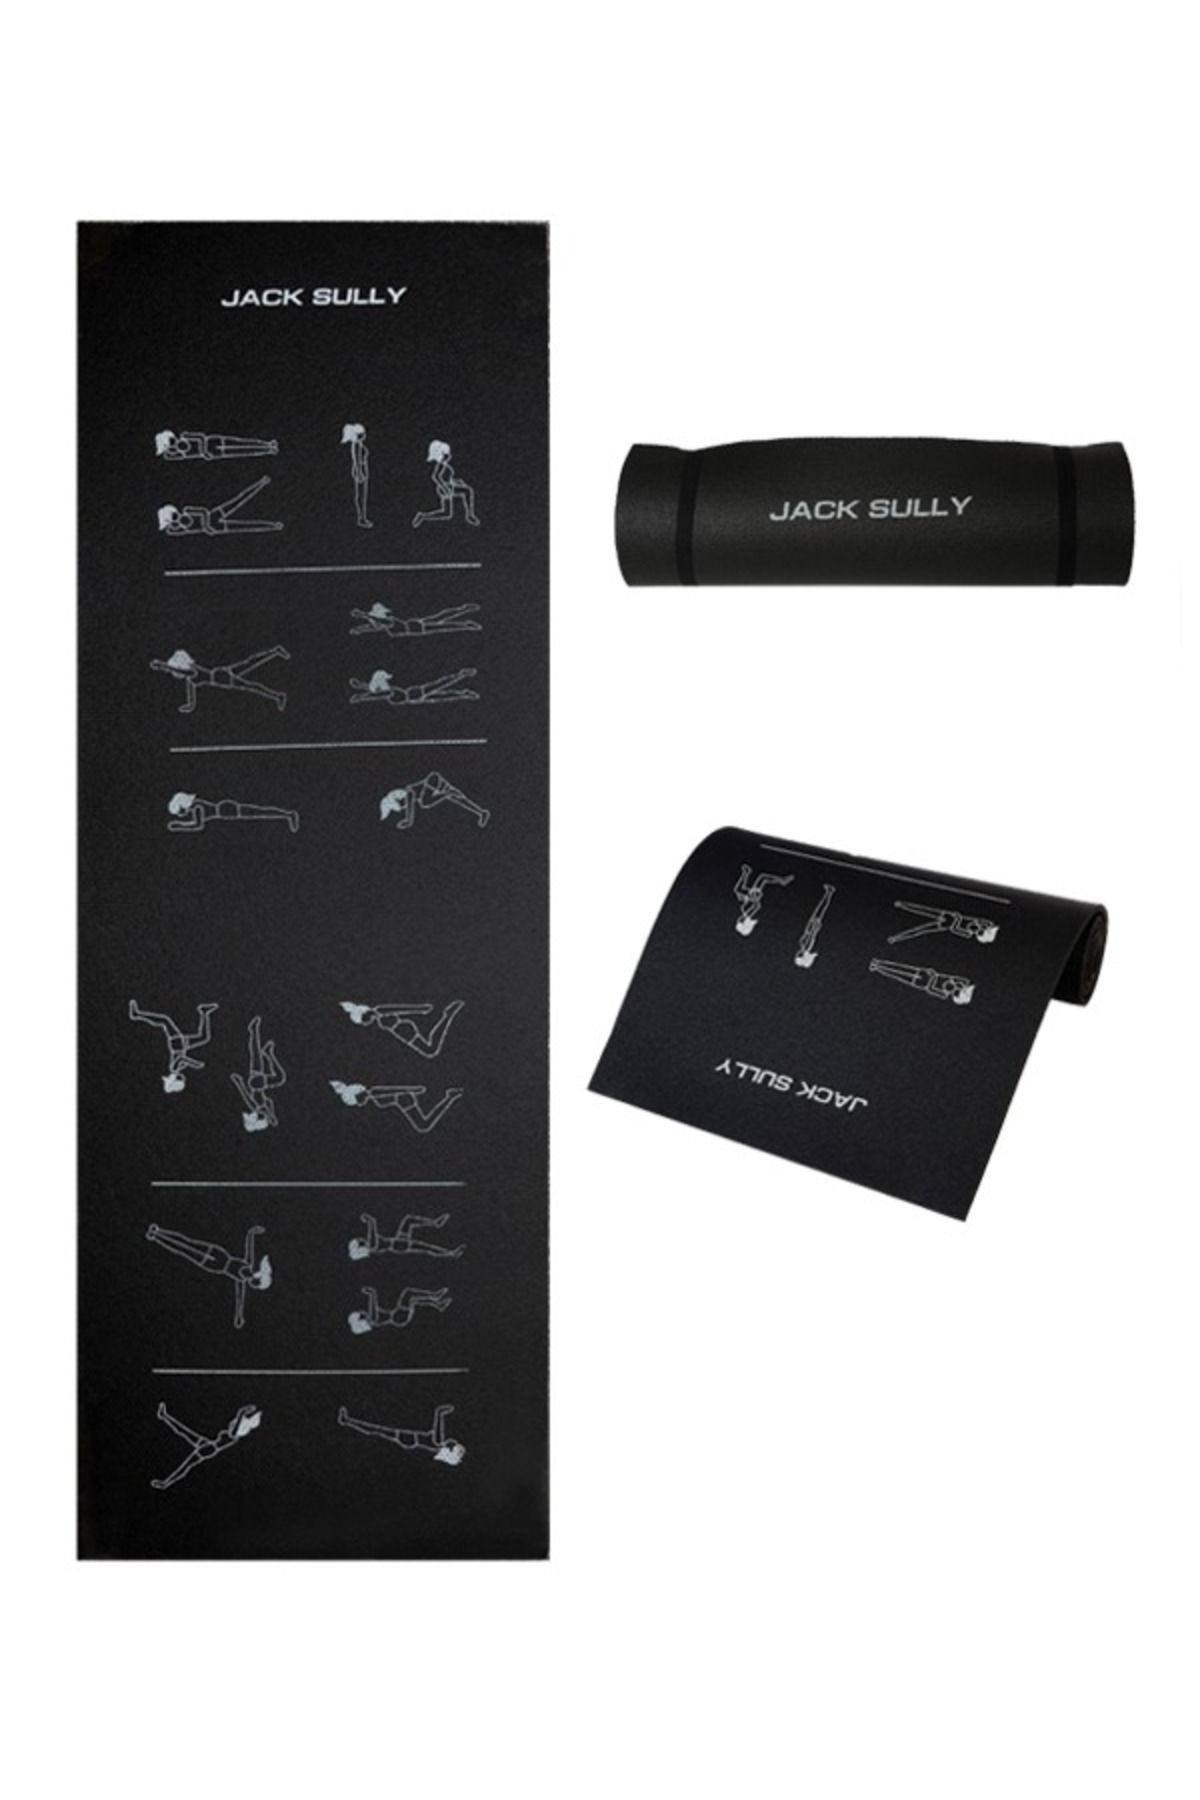 Jack Sully Egzersiz Figürlü Siyah Pilates Ve Yoga Minderi 180x60cm 10mm I Delta I Yukon I Benardo I Black Deer